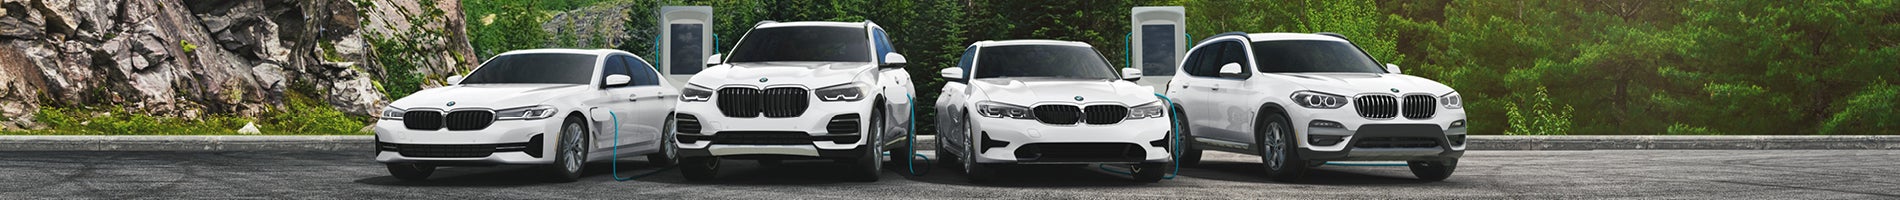 BMW vehicle line up